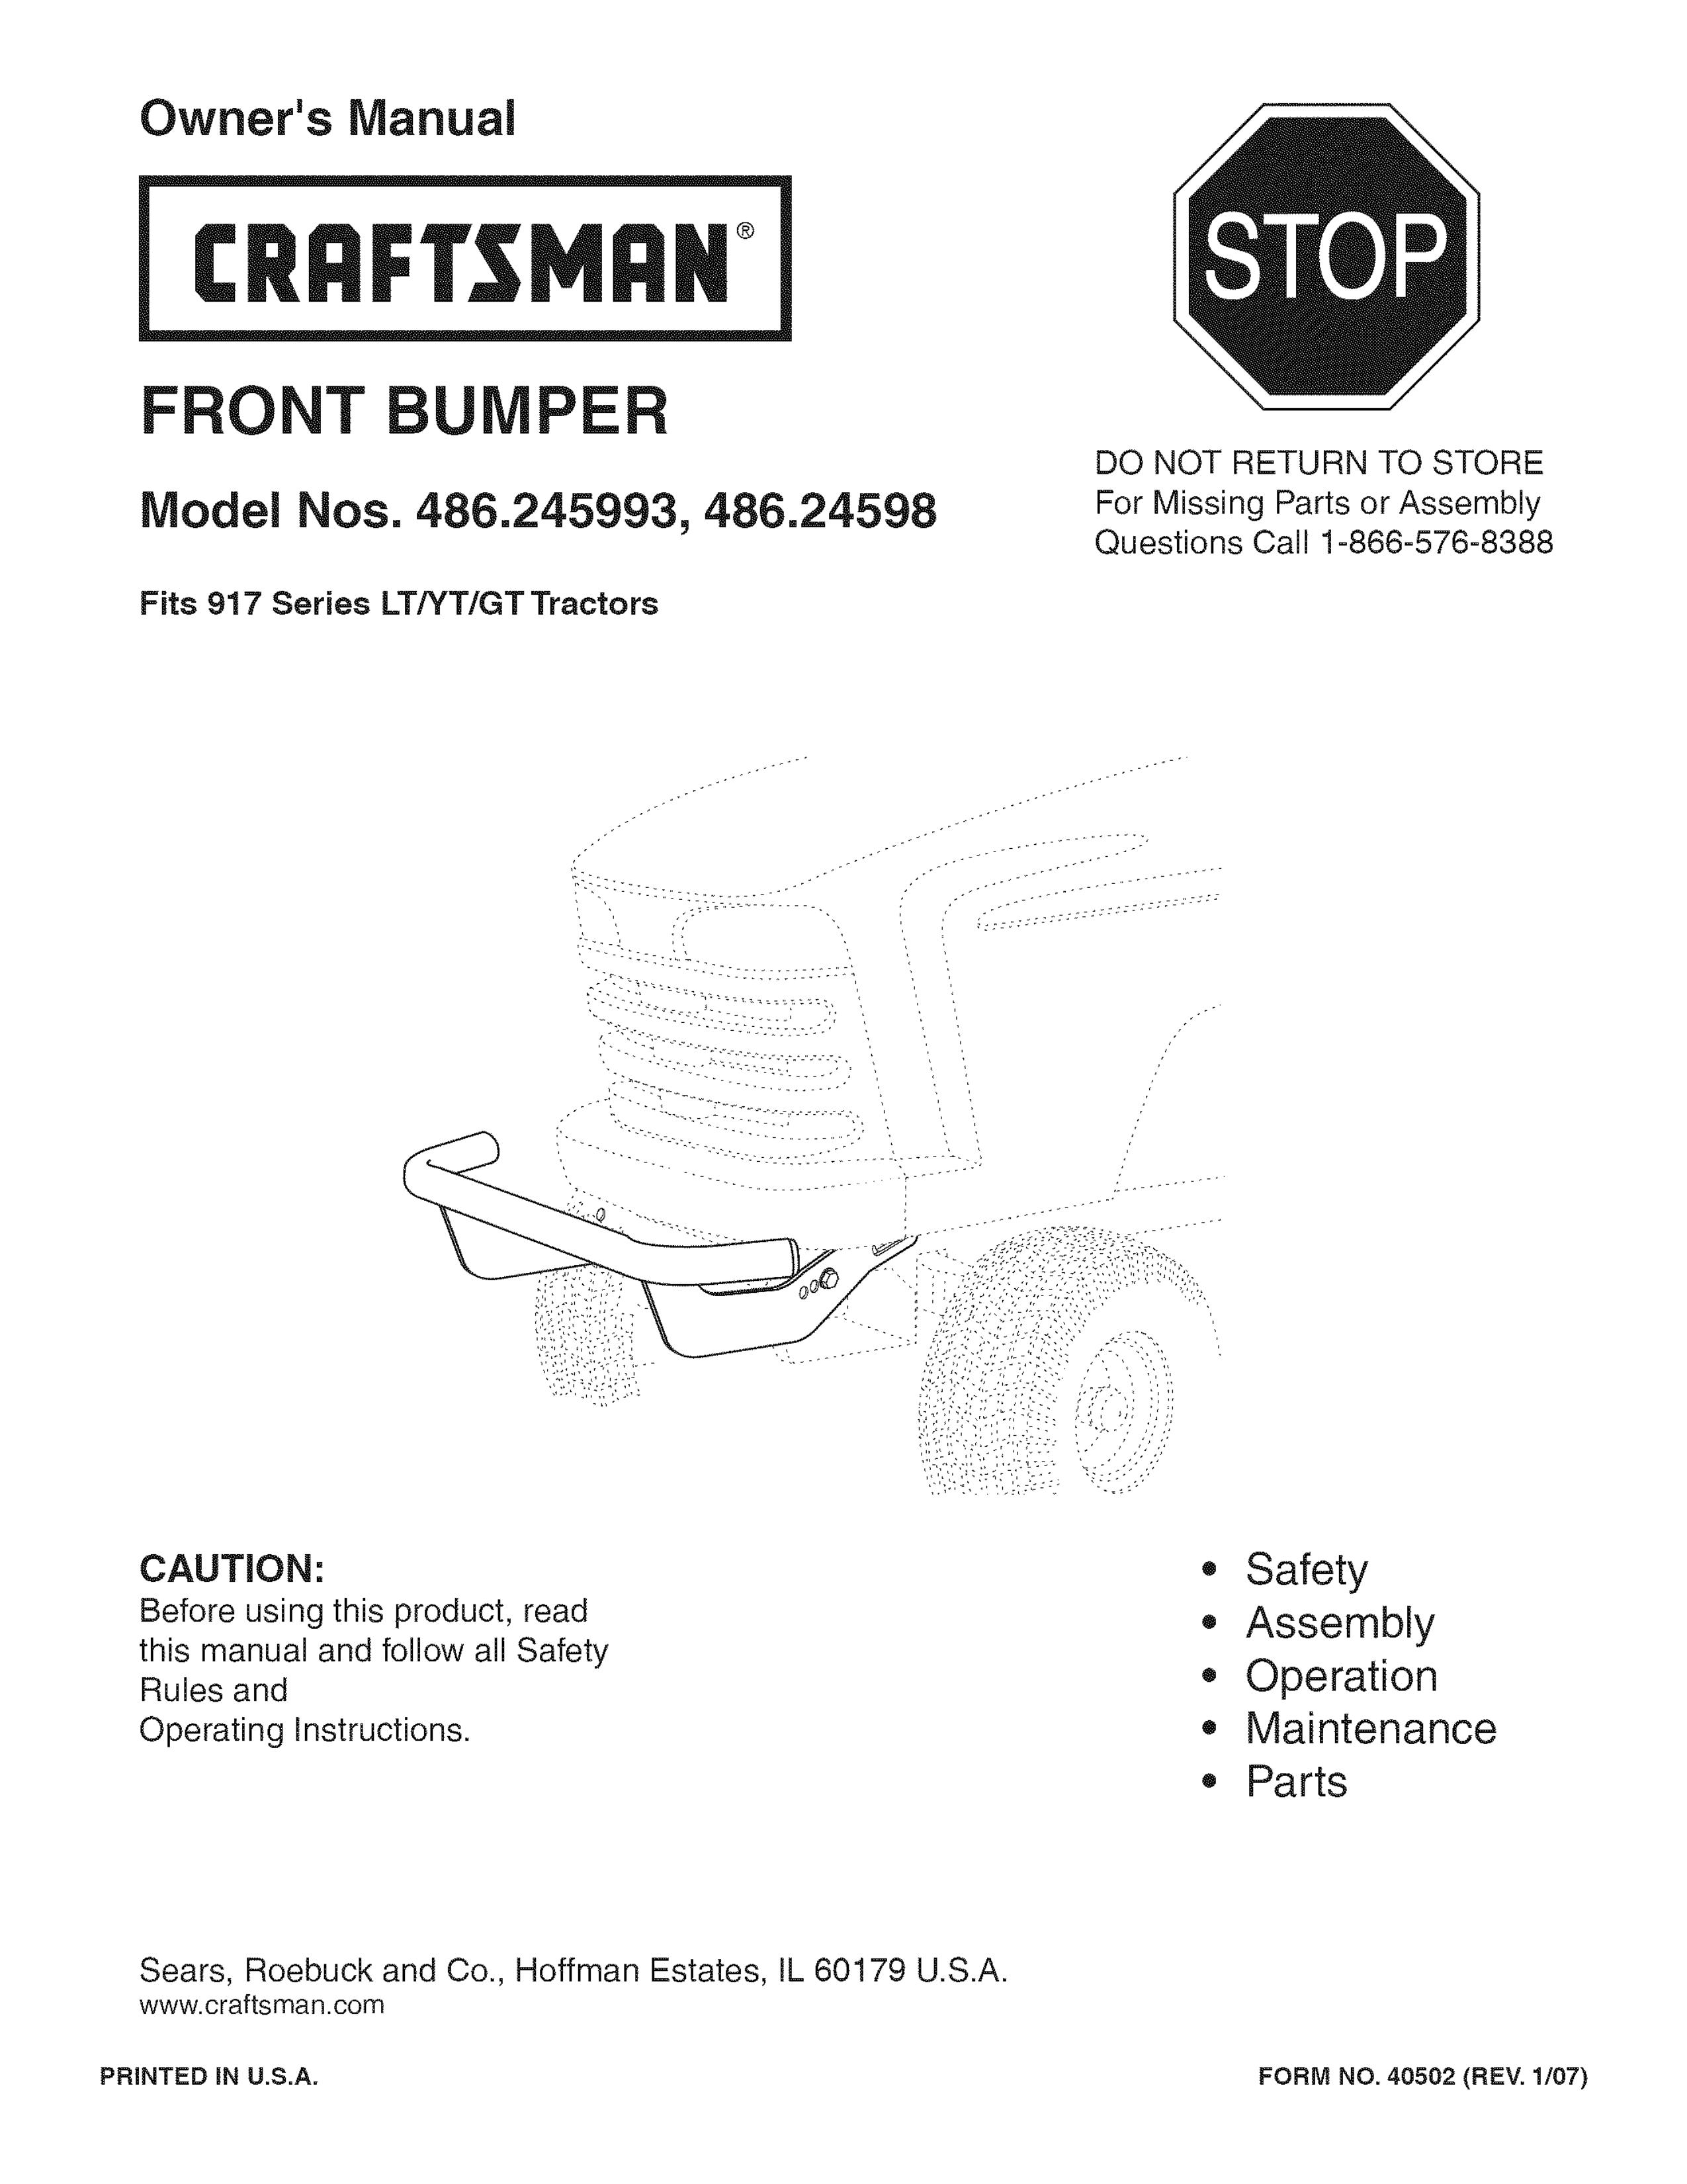 Craftsman 486.24598 Lawn Mower Accessory User Manual